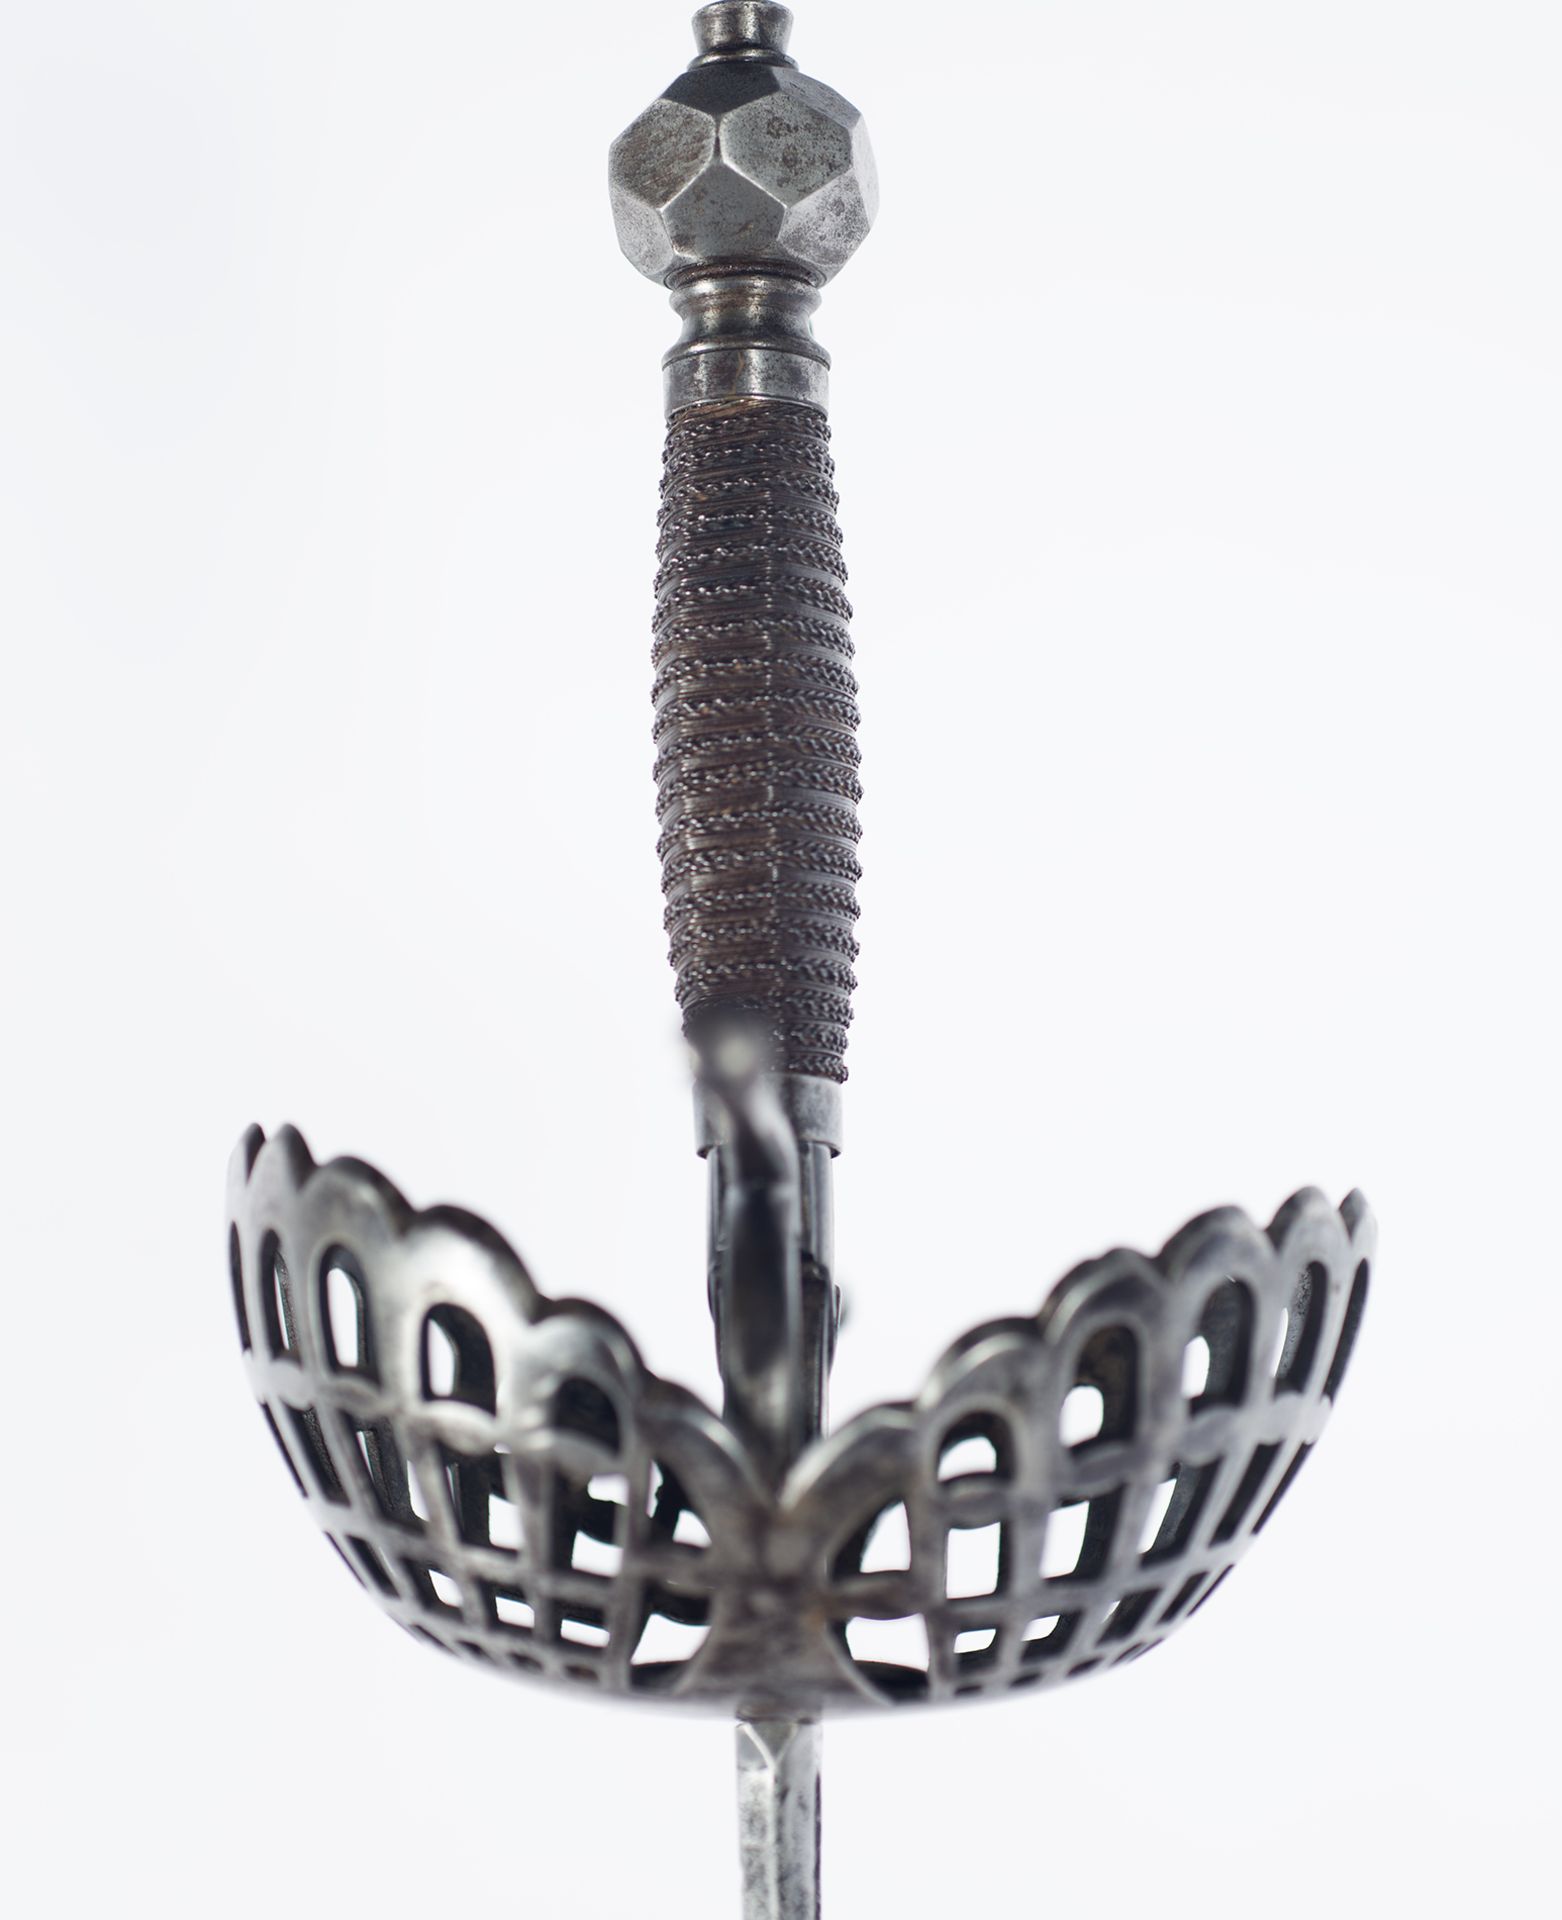 Spanish Toledo cup sword by Antonio Ruiz Toledo, 17th century - Image 15 of 17